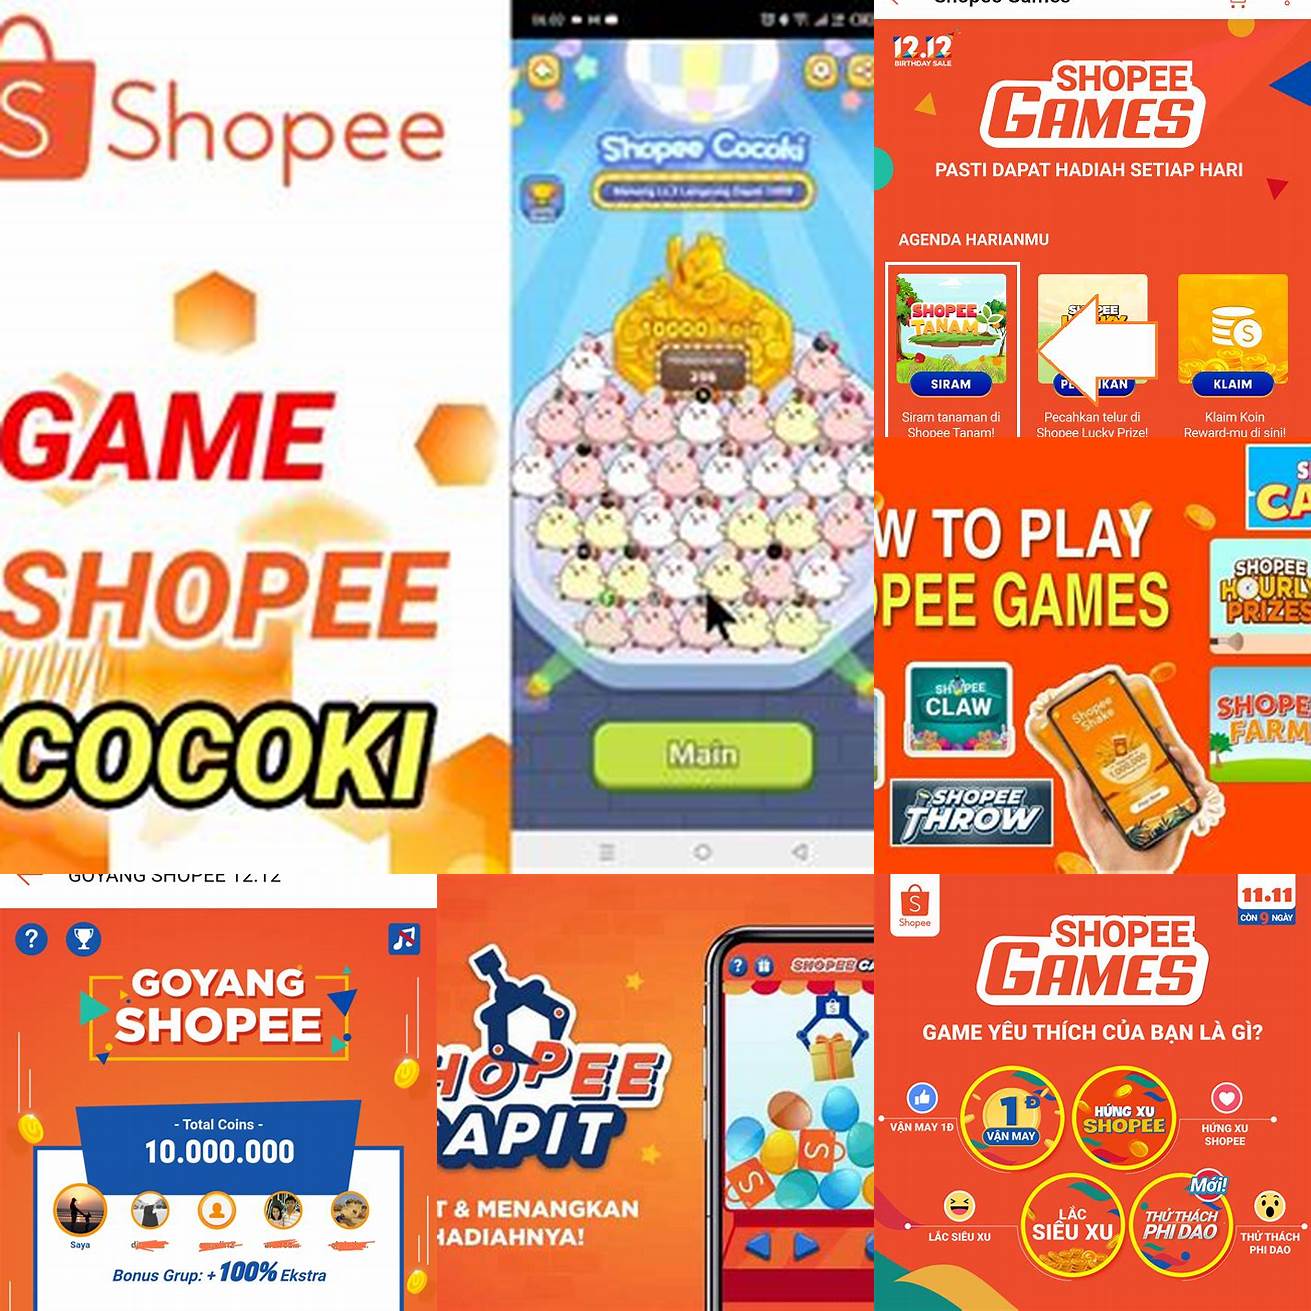 Shopee Games